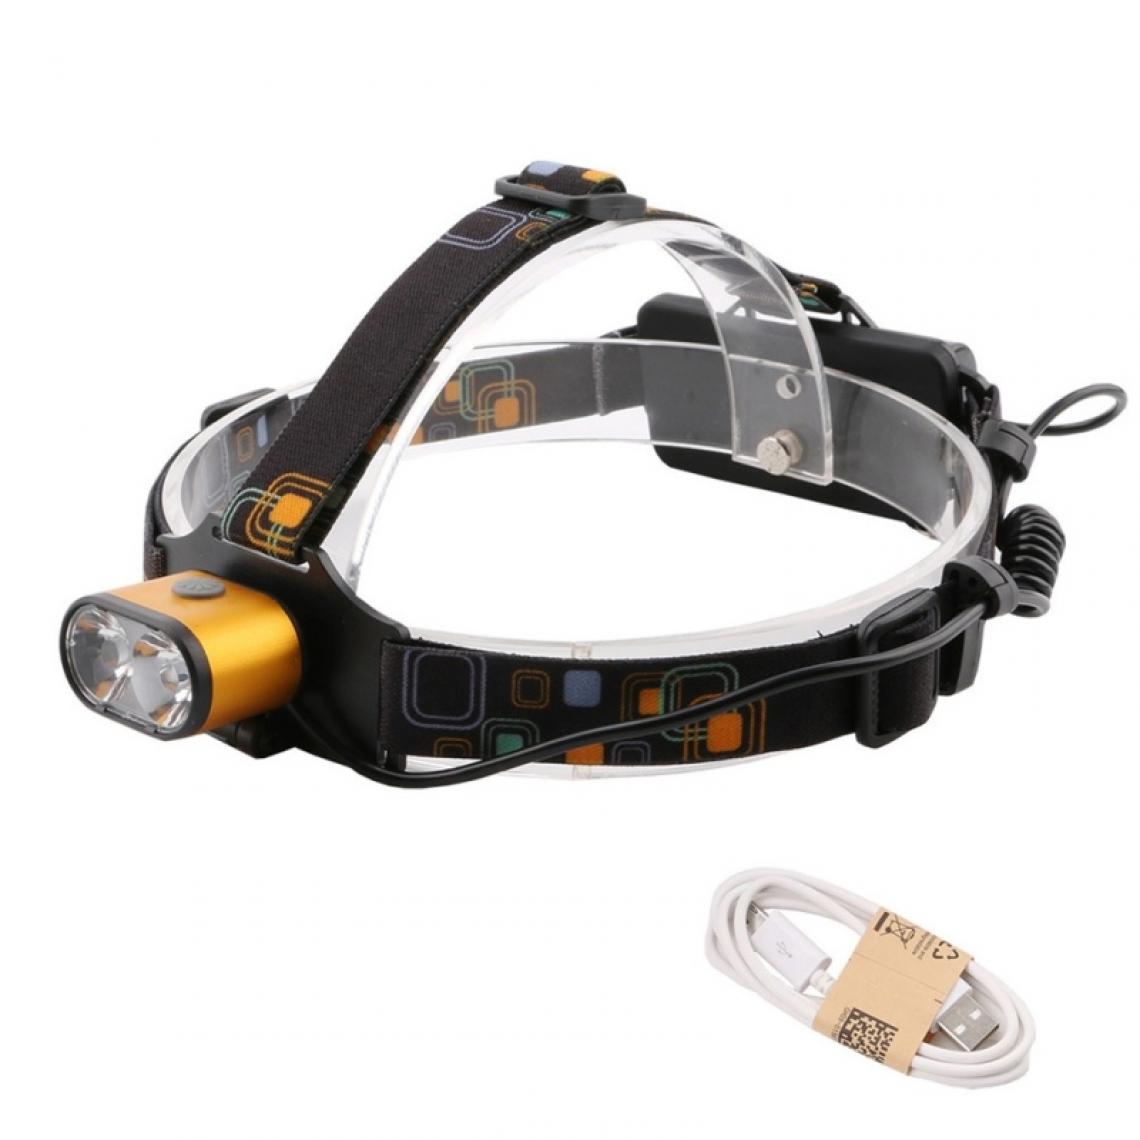 Wewoo - Lampe frontale LED 2LED T6 USB Rechargeable Extérieur Phares Étanches Camping - Lampes portatives sans fil